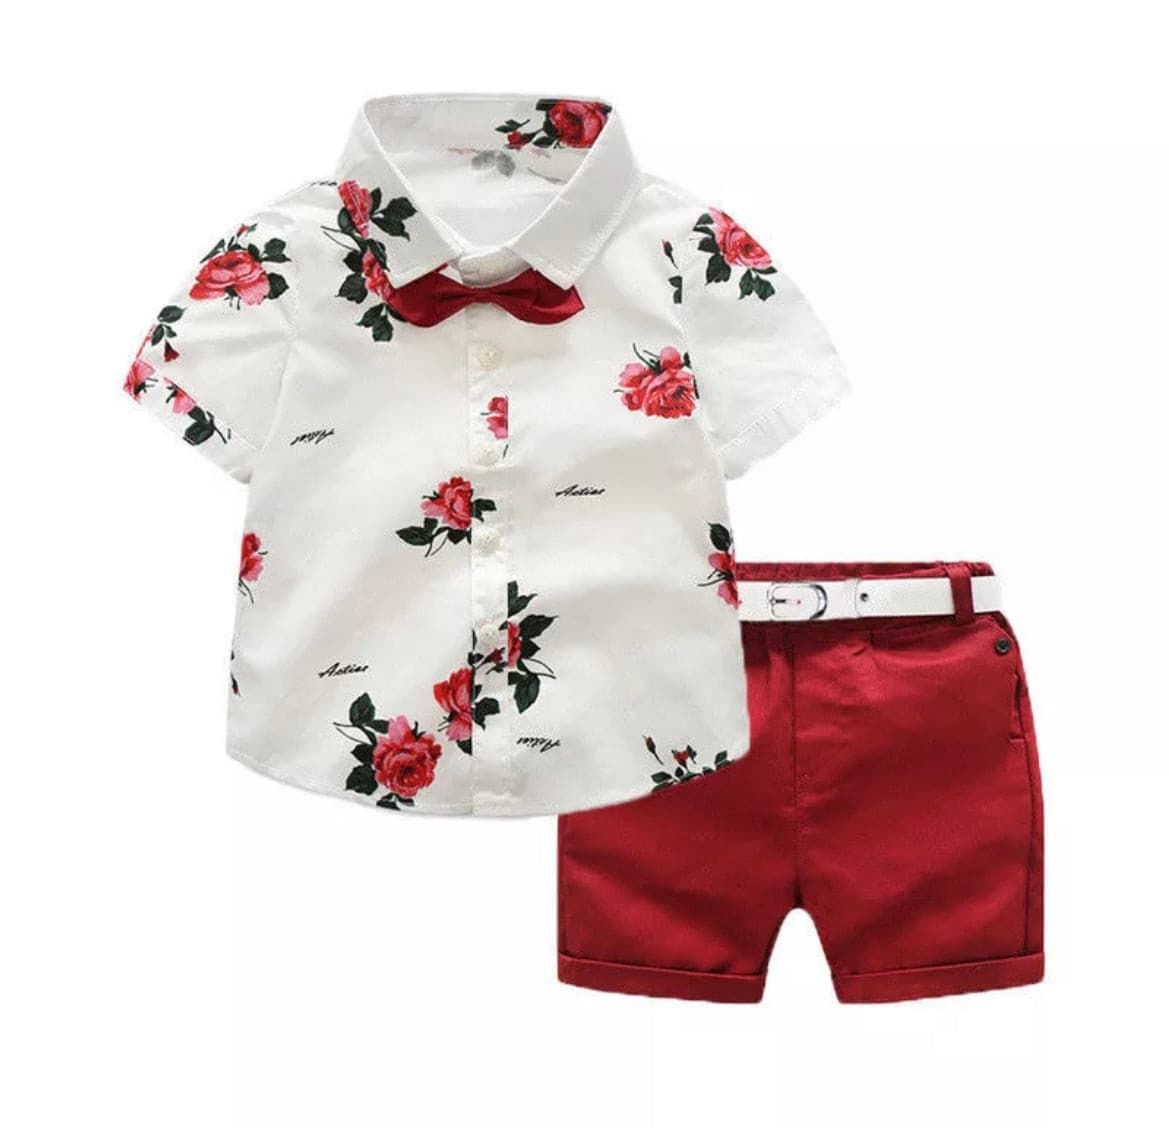 Boys Floral Rose Button Shirt & Red Shorts Set.